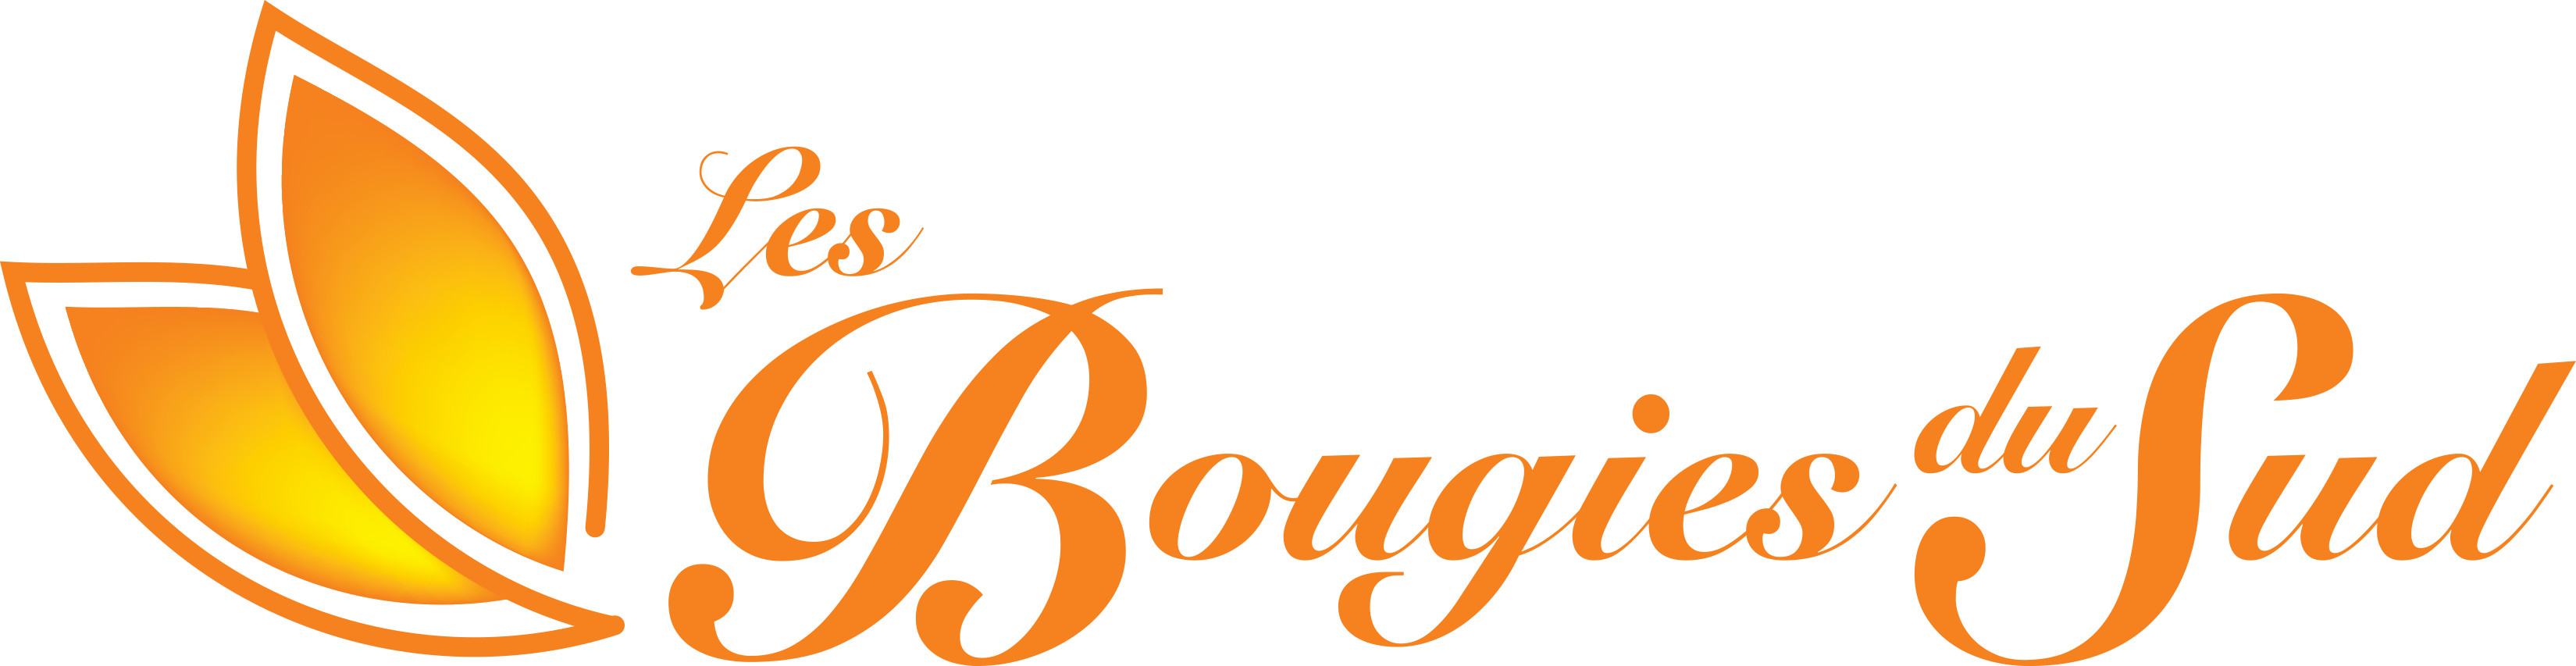 Les Bougies du Sud | Bougies de massage made in France